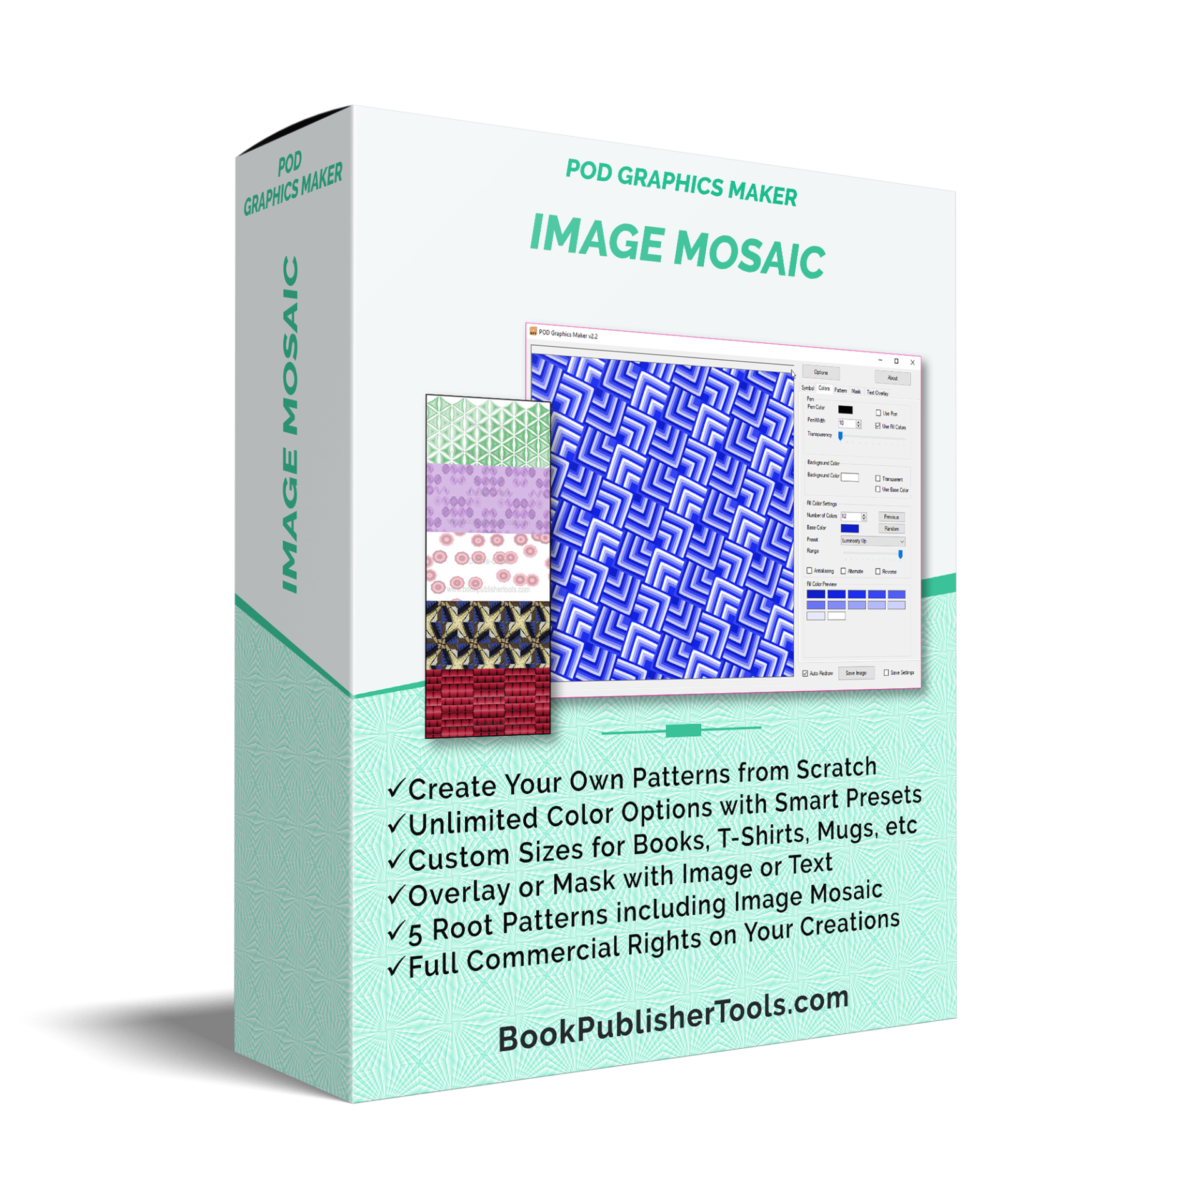 POD Graphics Maker Image Mosaic software box